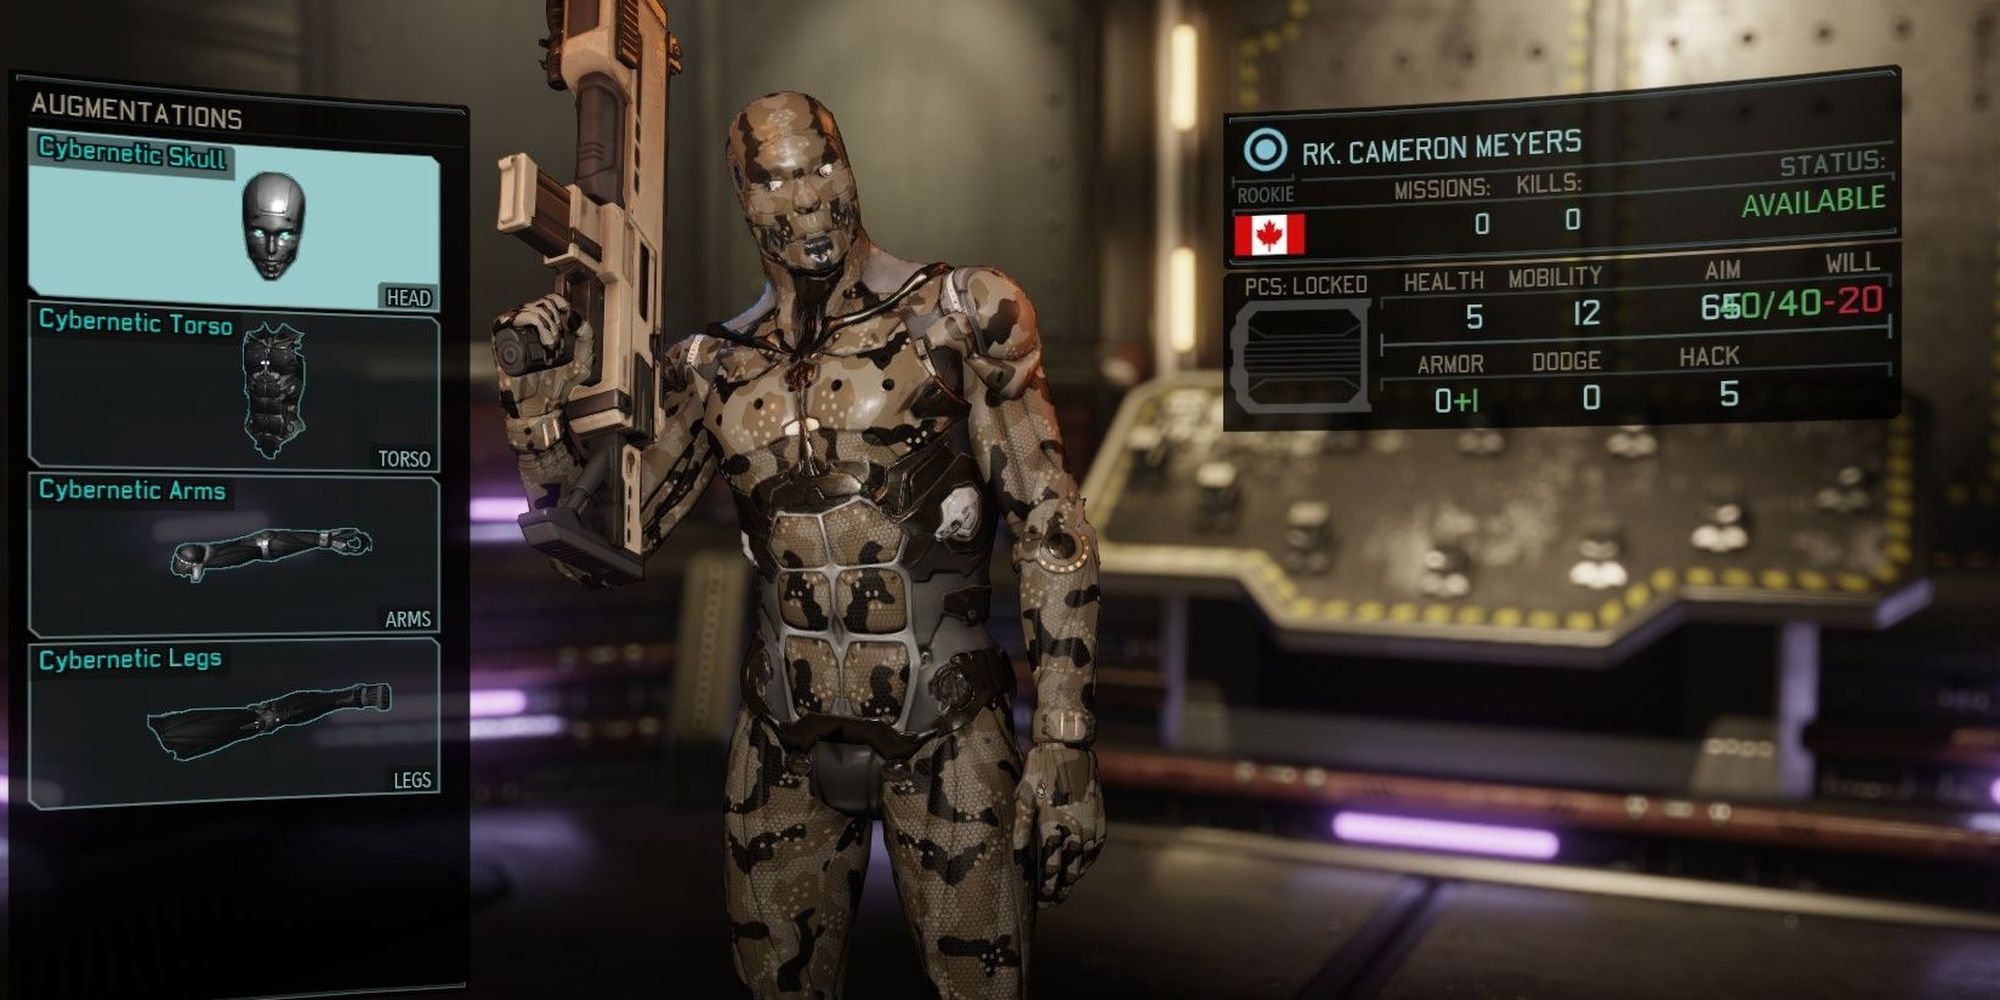 Xcom2: Augmented Cyborg Xcom Soldier